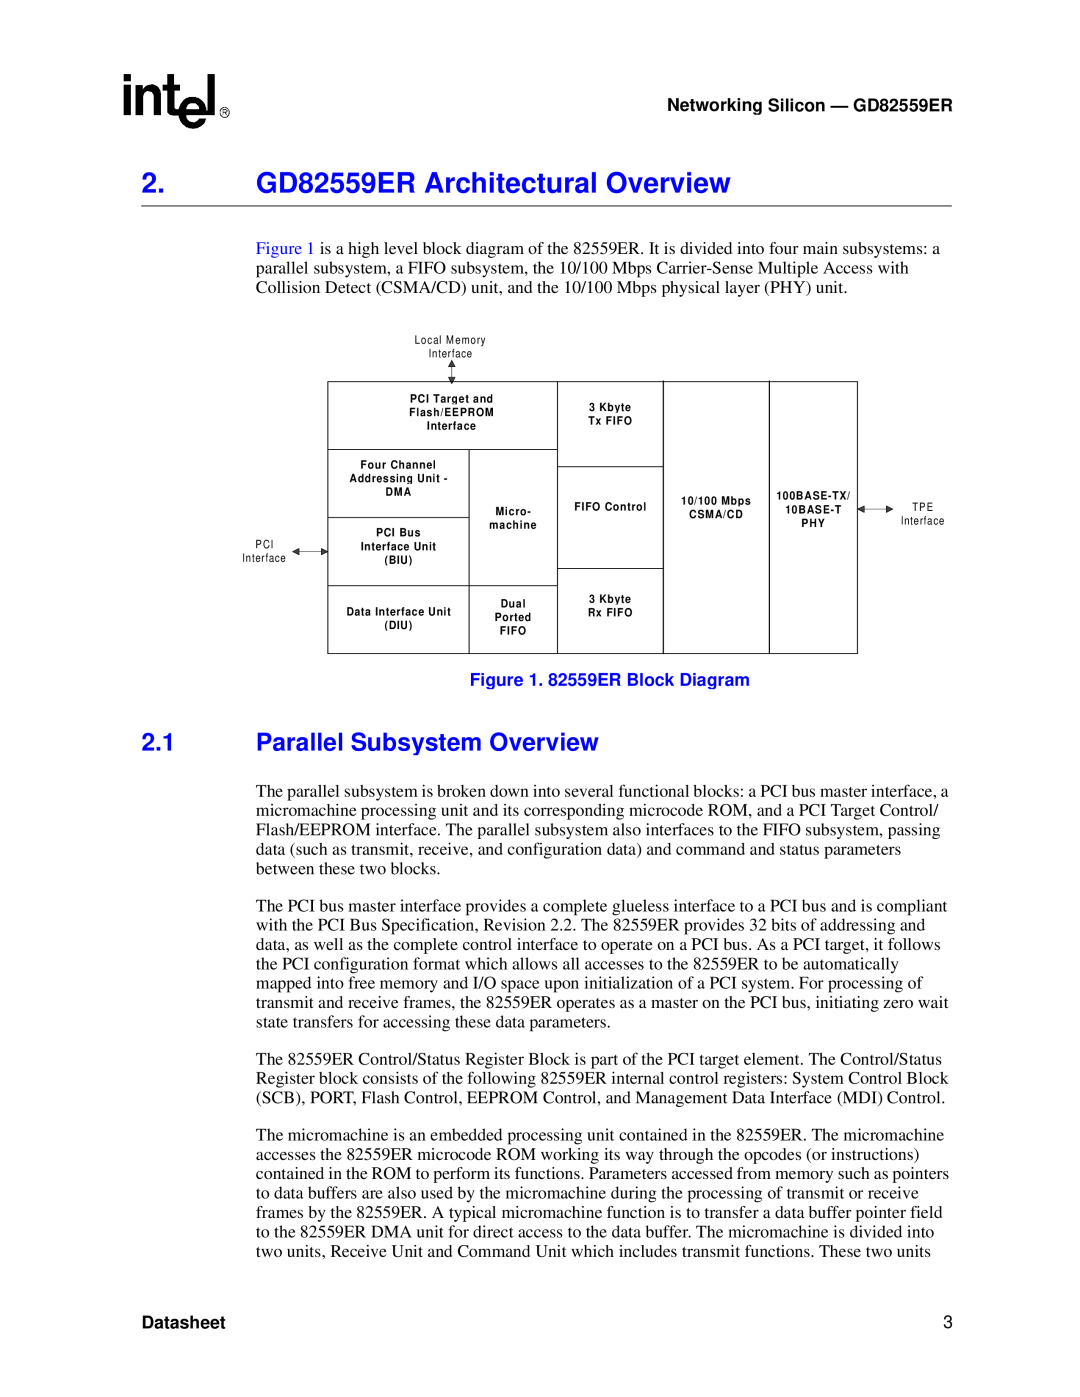 Intel manual 2. GD82559ER Architectural Overview, Parallel Subsystem Overview, 82559ER Block Diagram, Datasheet 